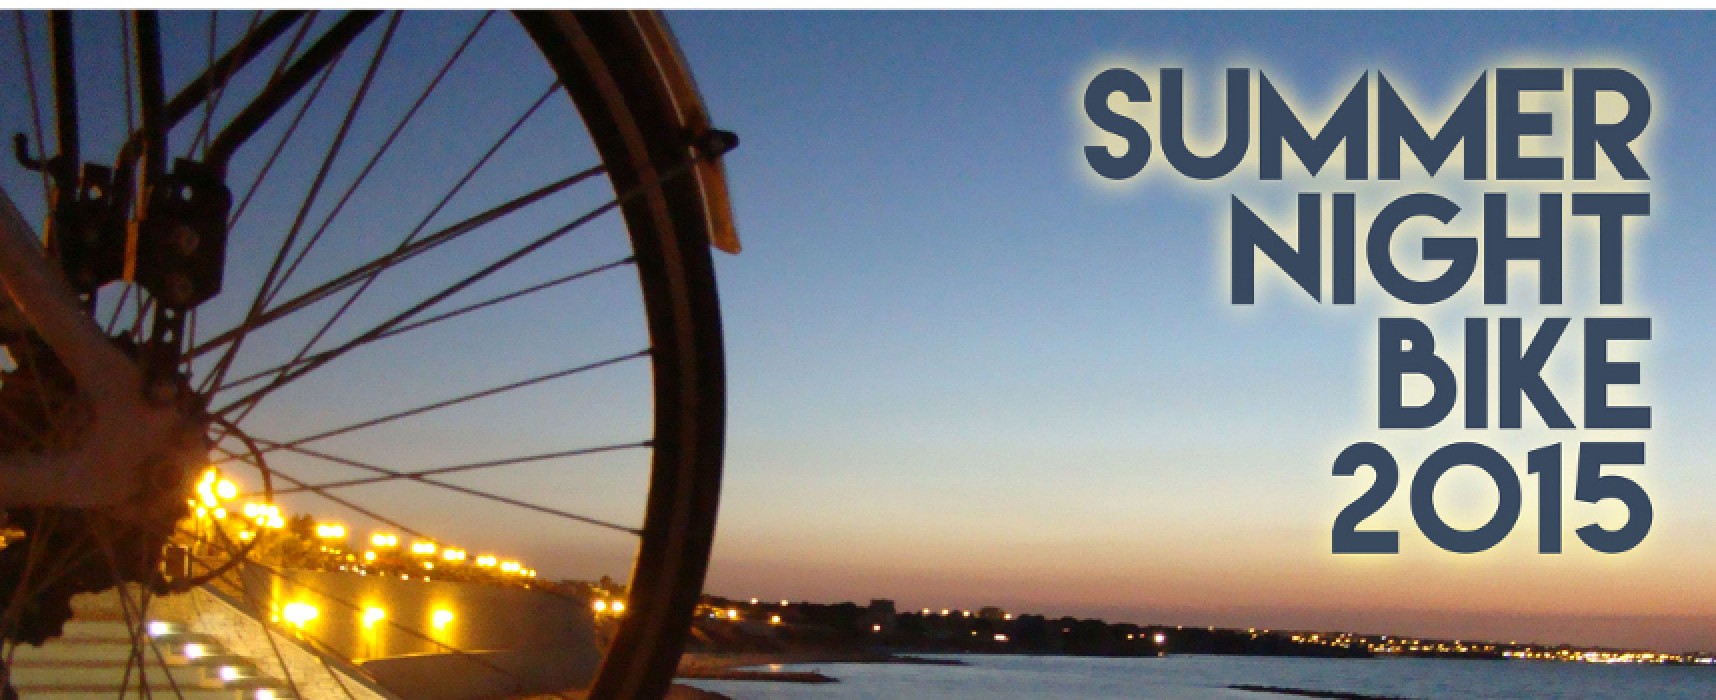 Stasera “Summer Night Bike”, seconda notte d’estate in bicicletta targata Biciliae